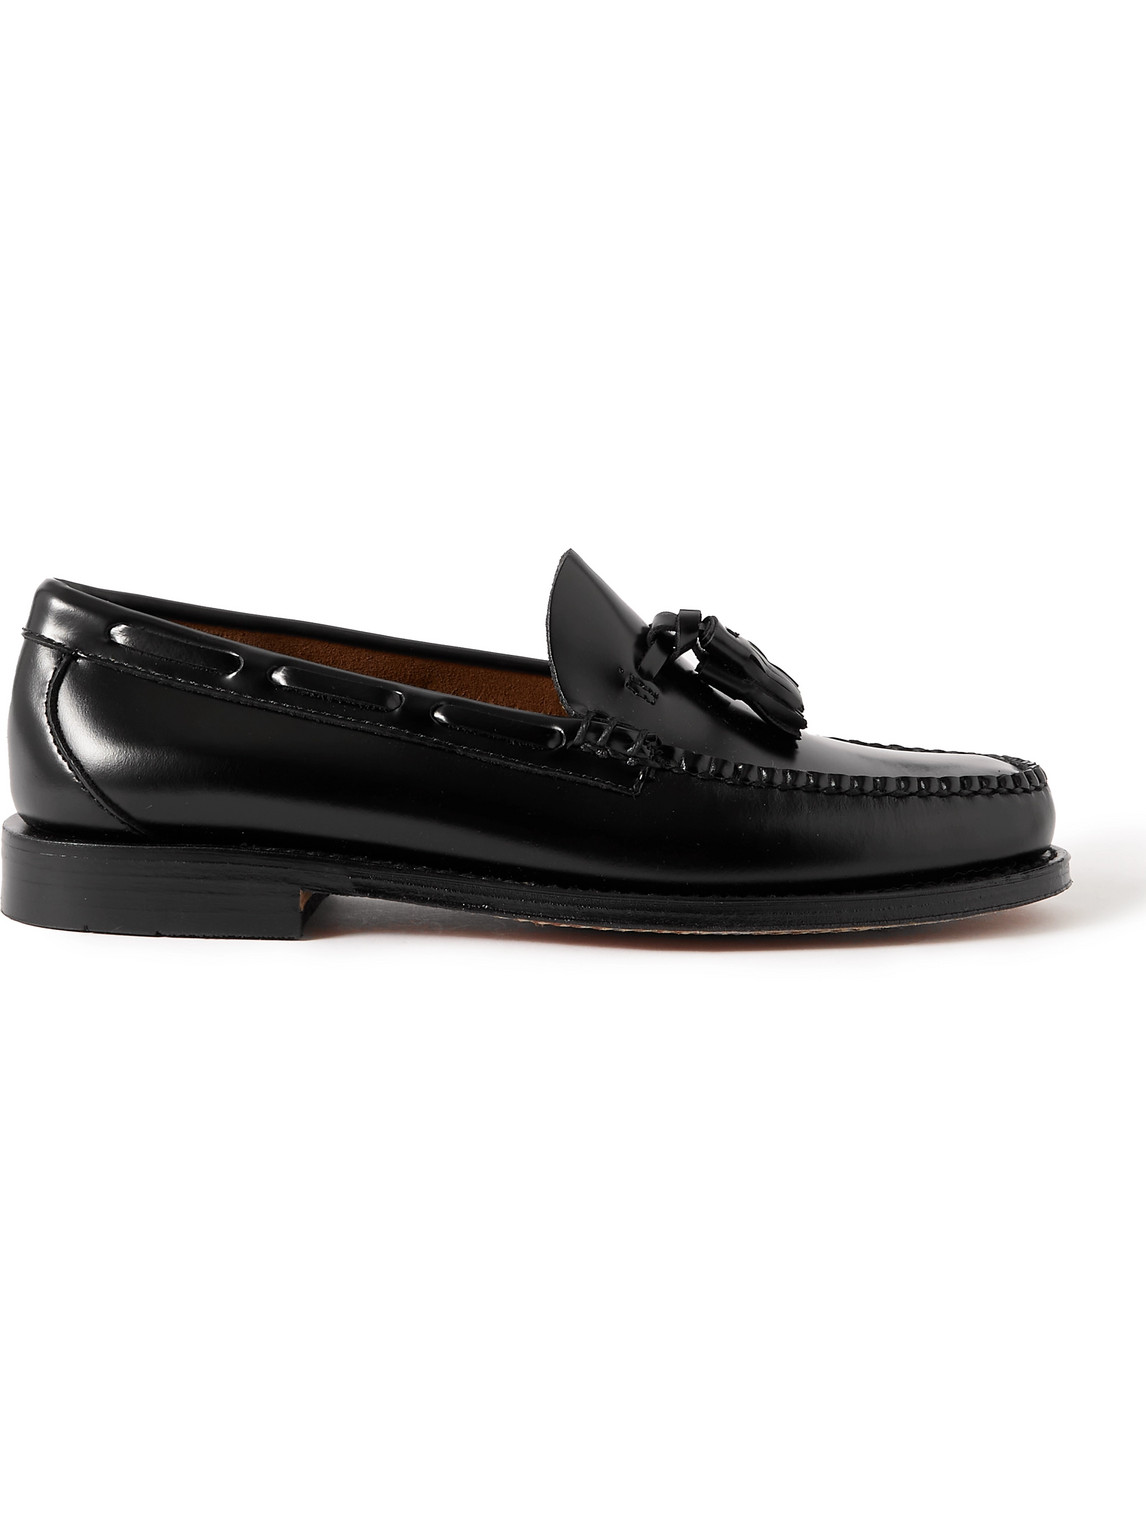 G.H. Bass & Co. - Weejuns Heritage Larkin Glossed-Leather Tasselled Loafers - Men - Black - UK 7 von G.H. Bass & Co.